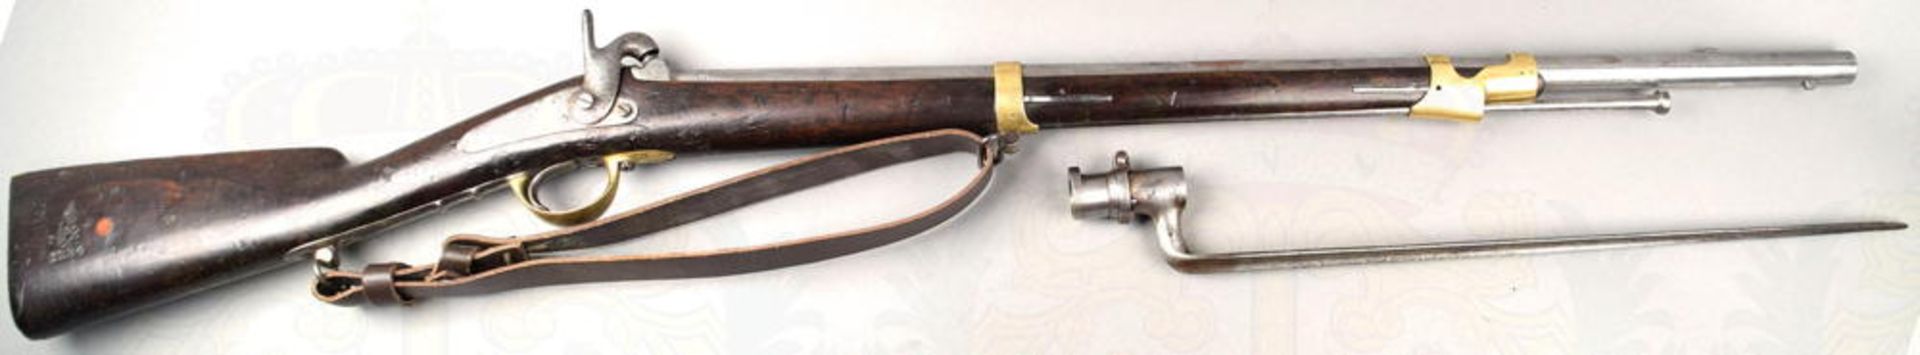 GENDARMERIE-MUSKETON M 1854 MIT BAJONETT, glatter Rundlauf, ca. Kal. 17,5mm, Messingkorn, eiserne